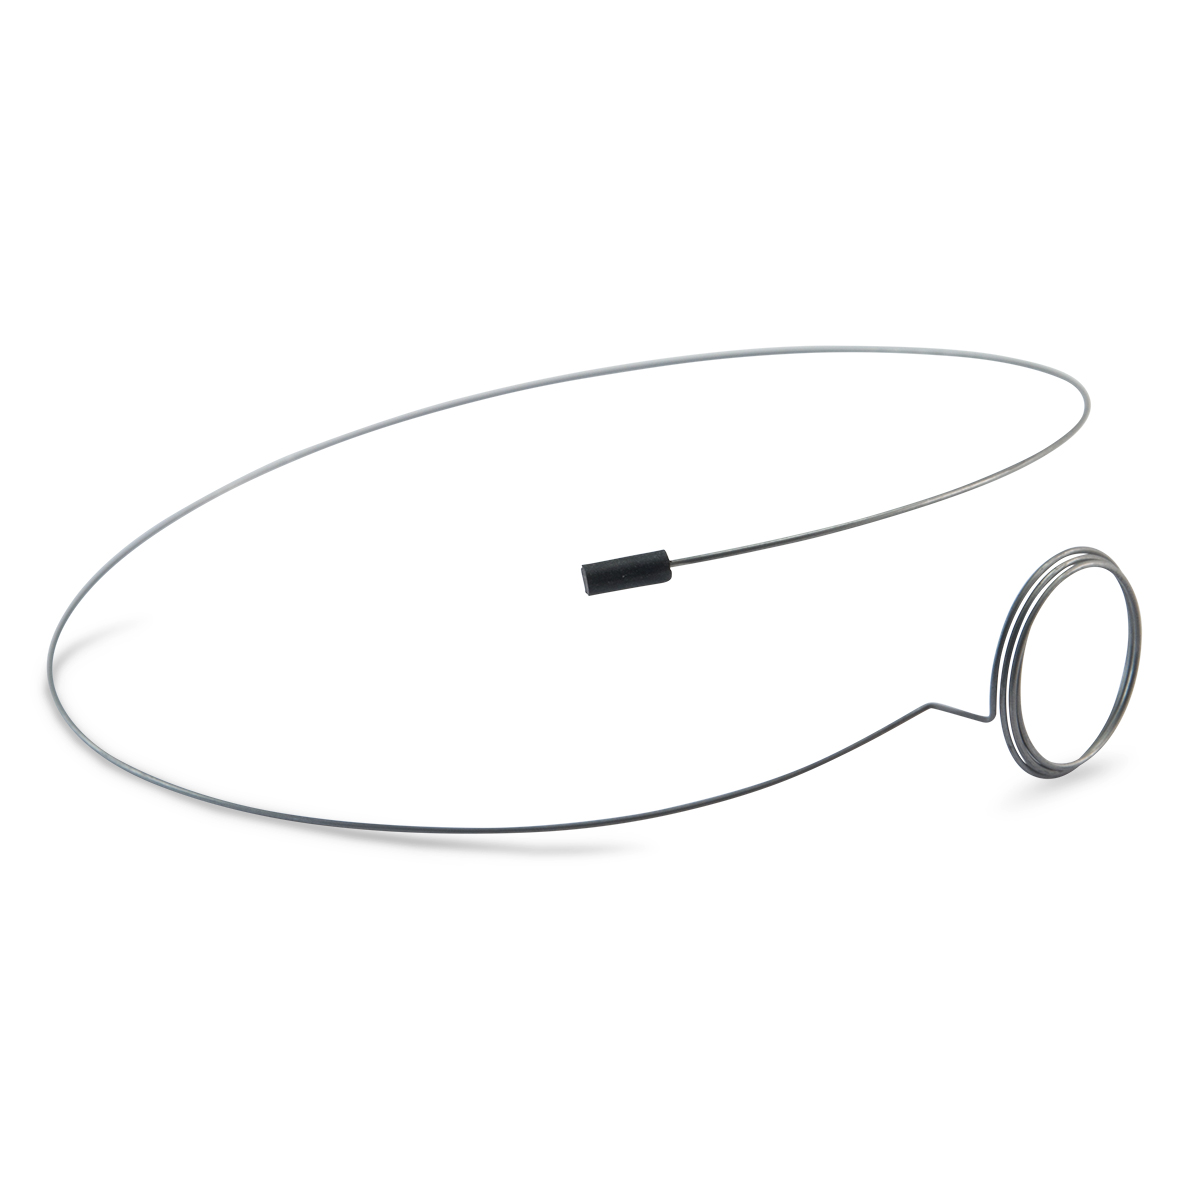 Bergeon 5461 Eyeglass holder stainless steel adjustable to any eyeglass